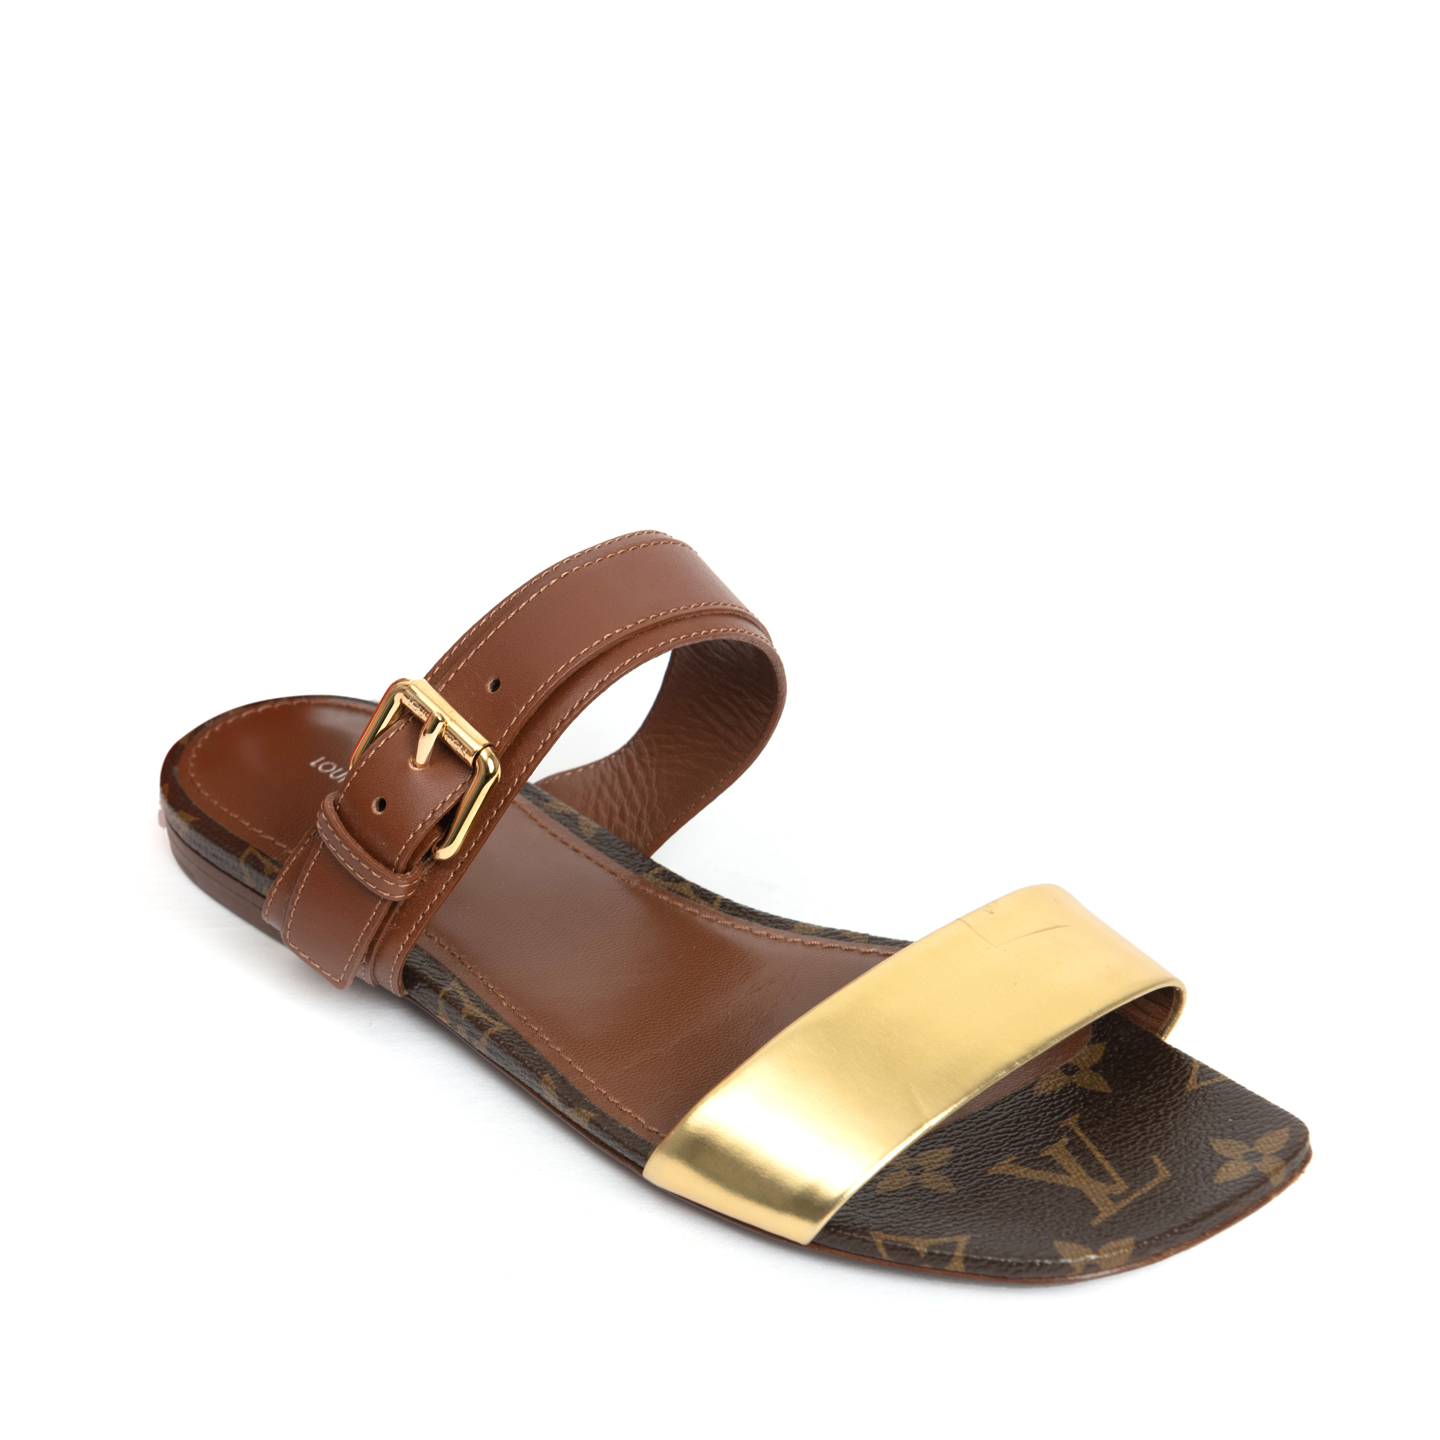  Louis  Vuitton  Golden Bloom Flat Sandals  Size 37 5 